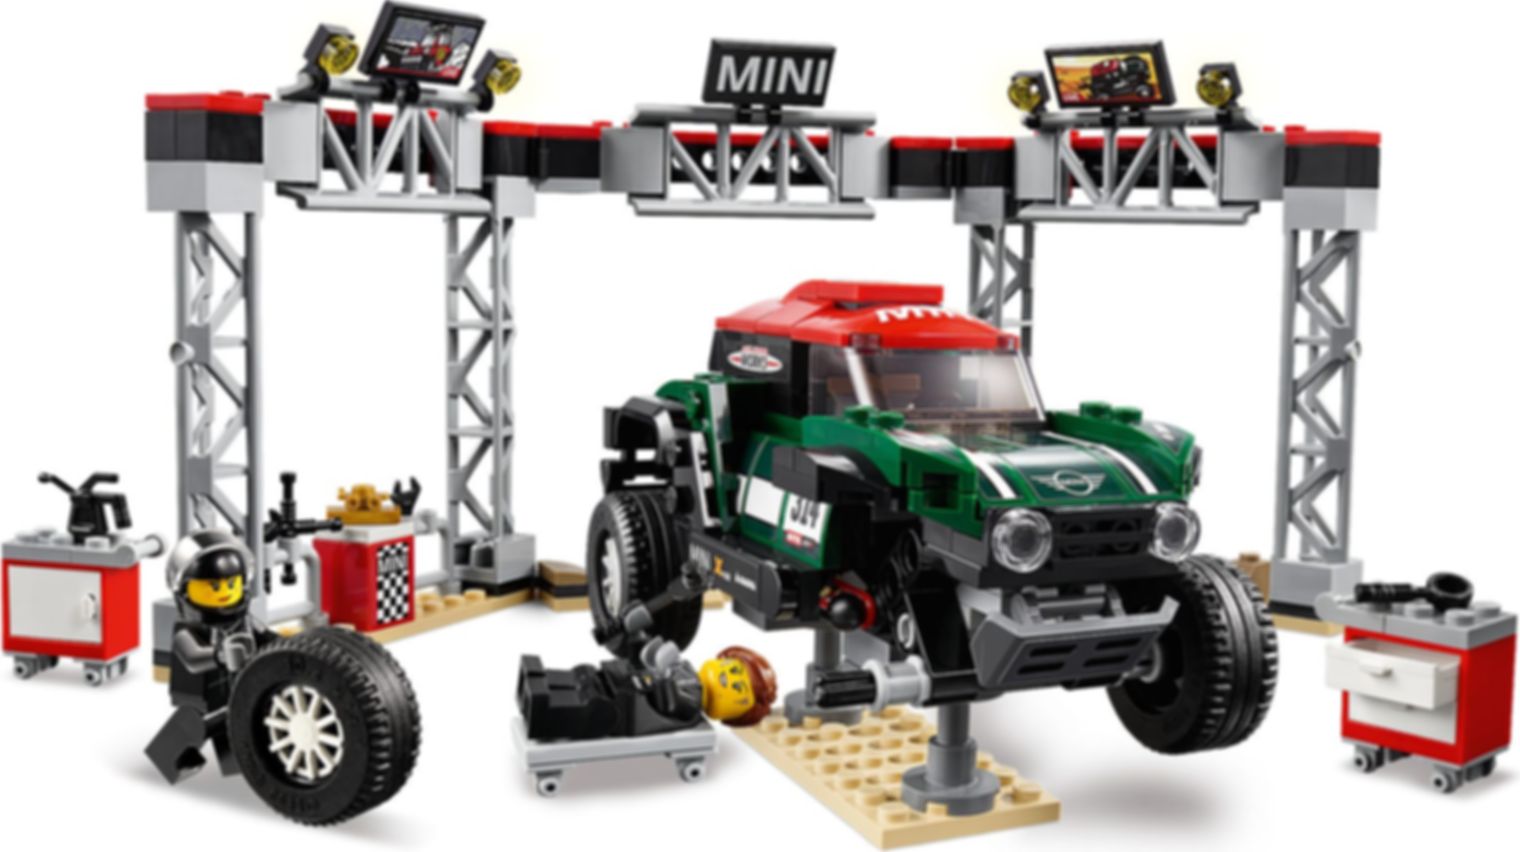 LEGO® Speed Champions 1967 Mini Cooper S Rally e 2018 MINI John Cooper Works Buggy gameplay